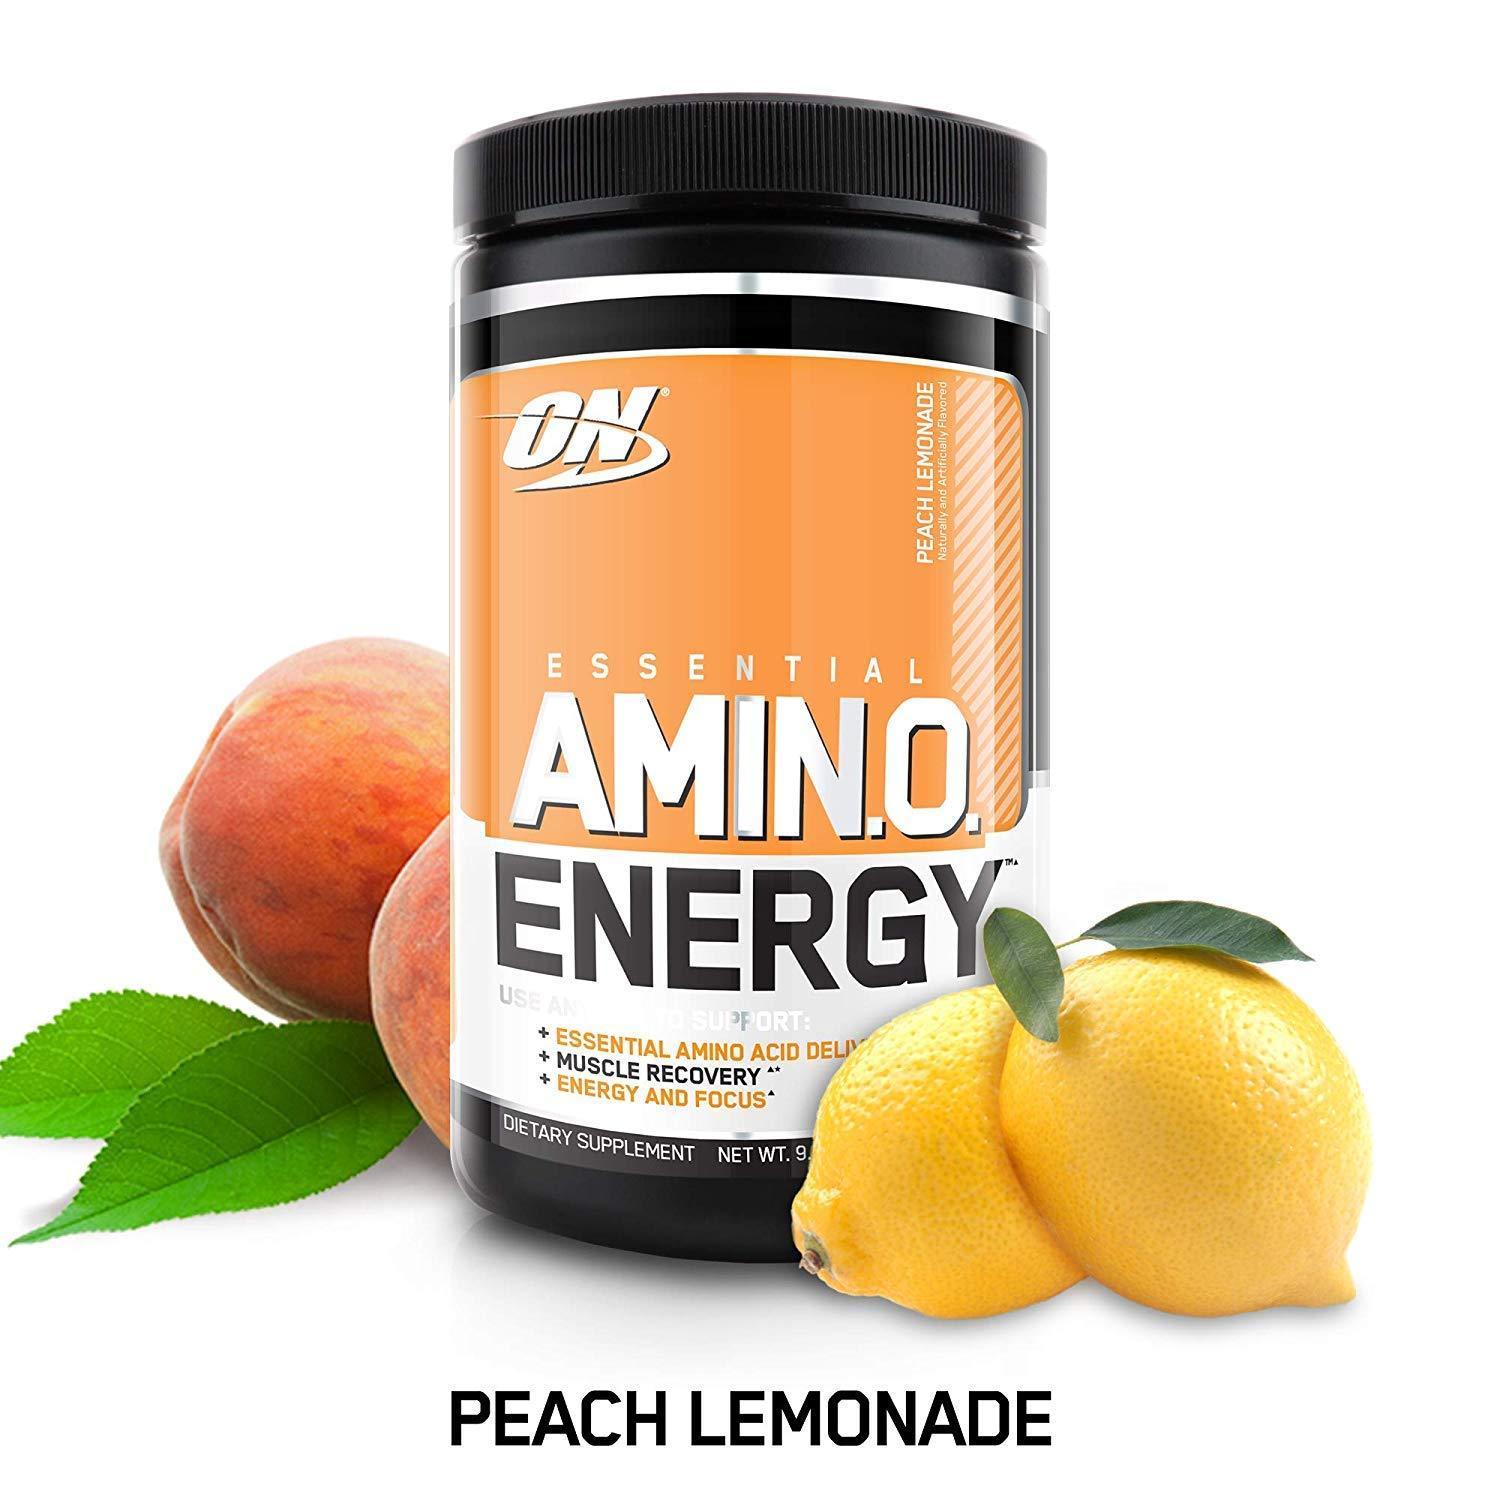 Optimum Nutrition Amino Energy with Green Tea and Green Coffee (Peach Lemonade)